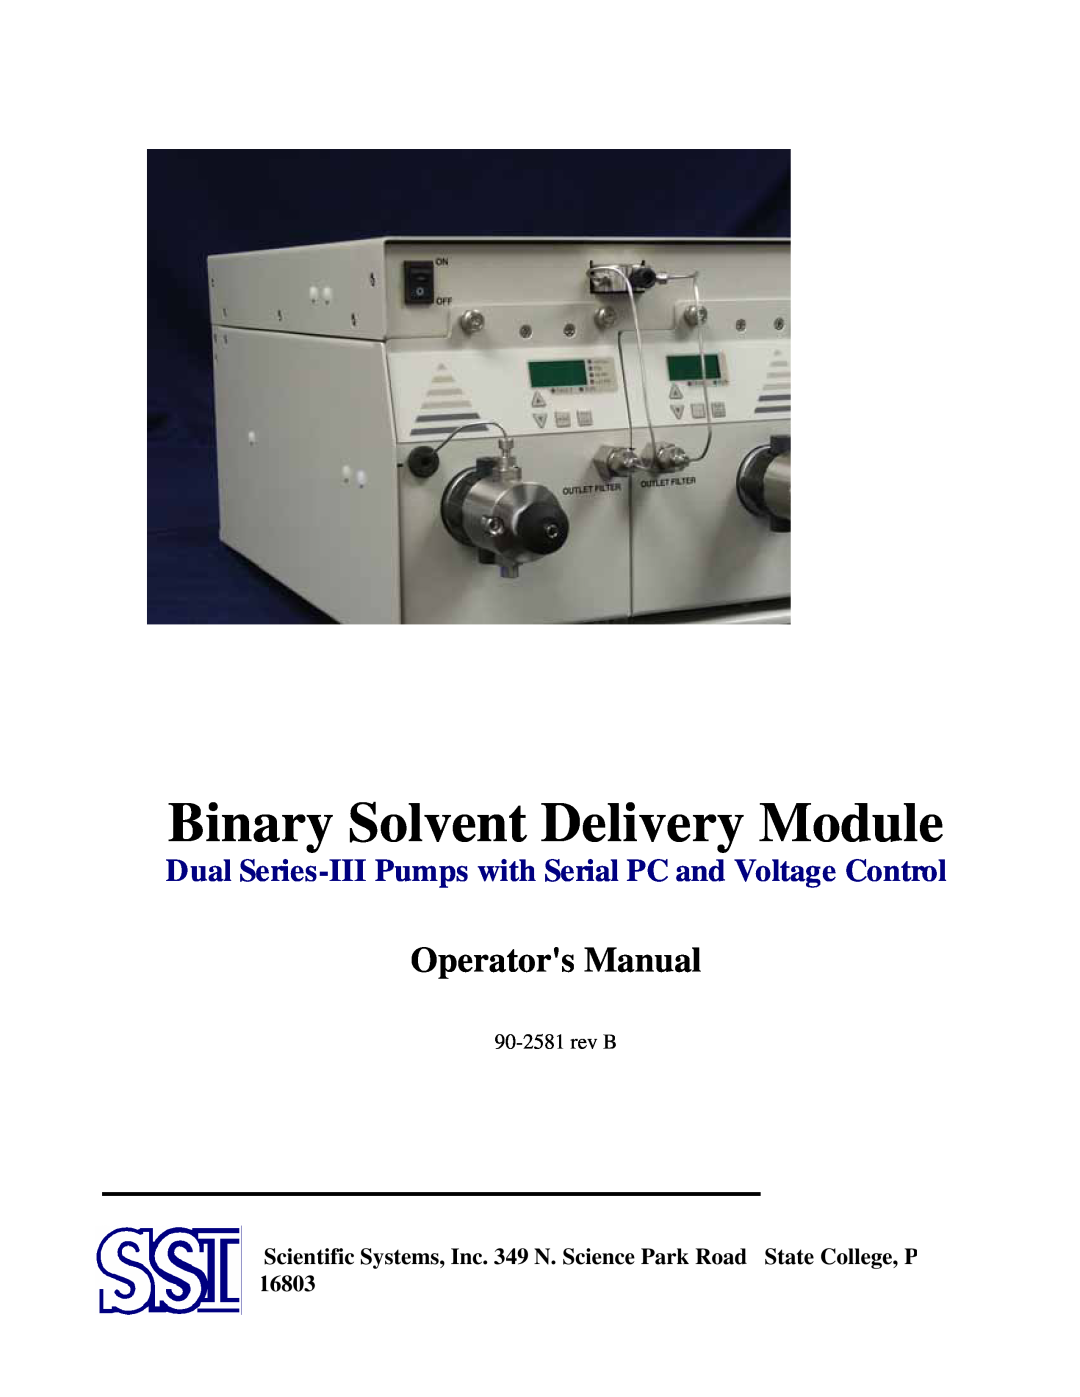 SSI America 90-2581 REV B manual Binary Solvent Delivery Module, Operators Manual 